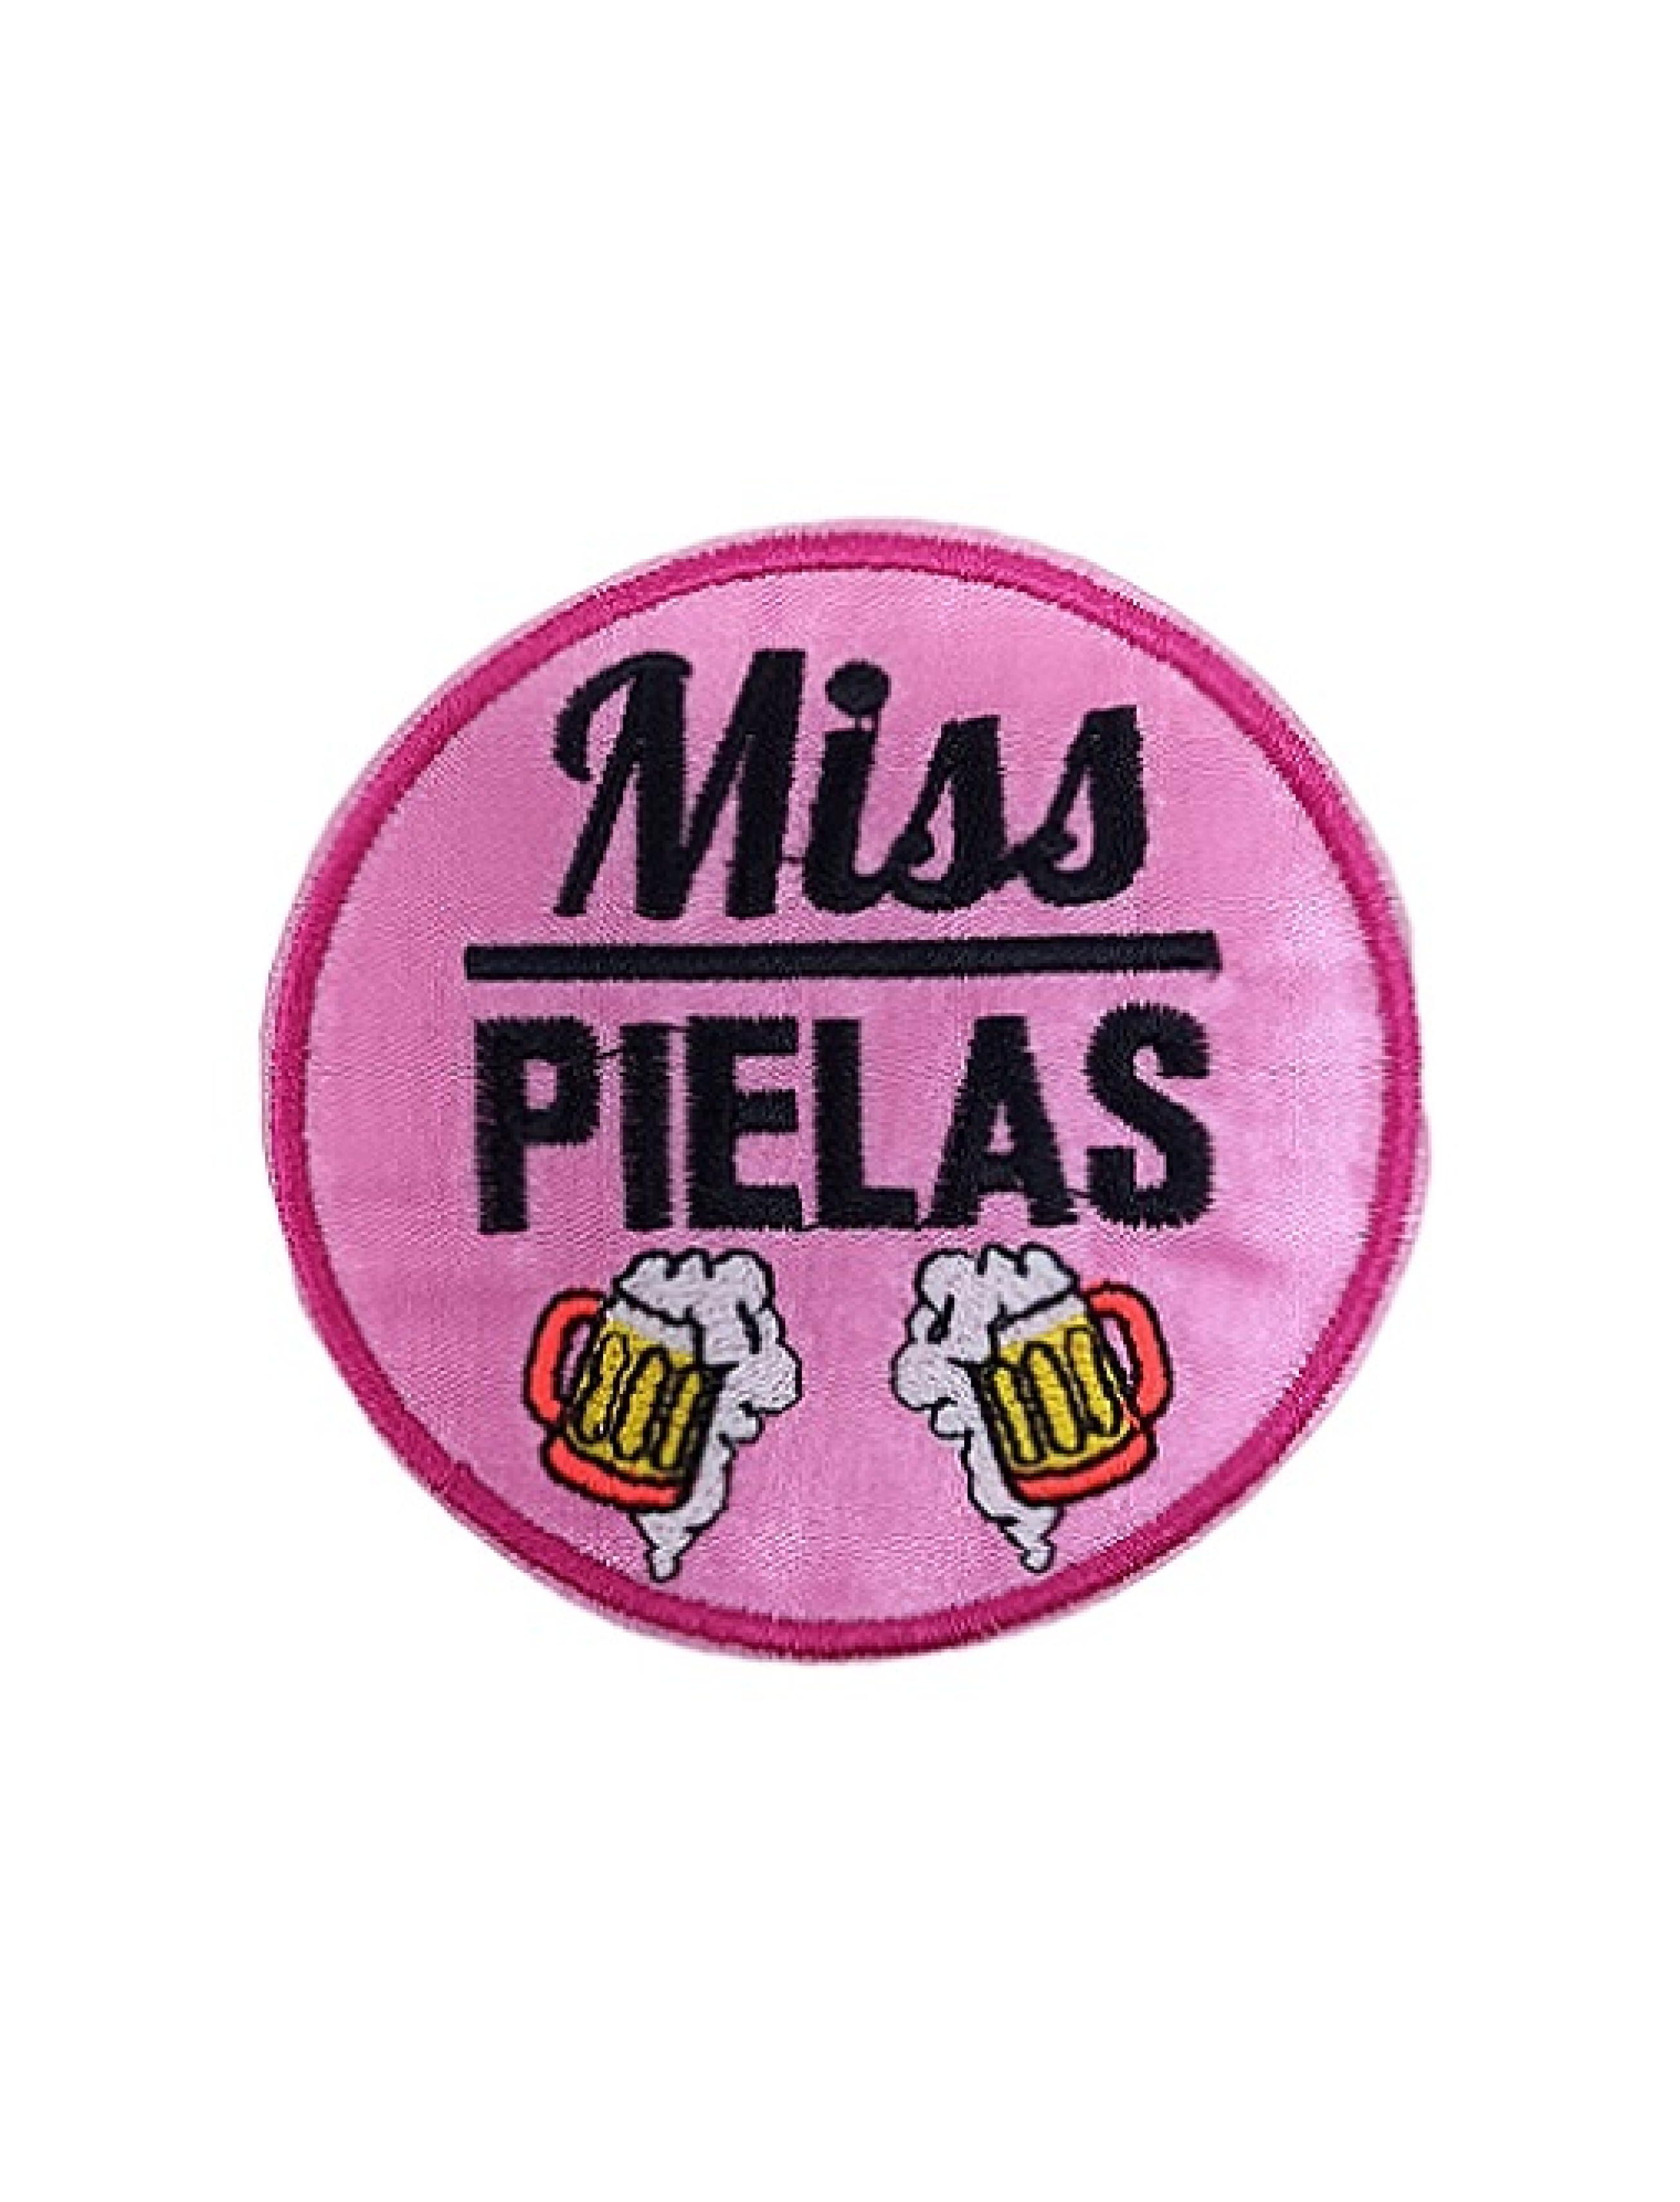 Miss Pielas